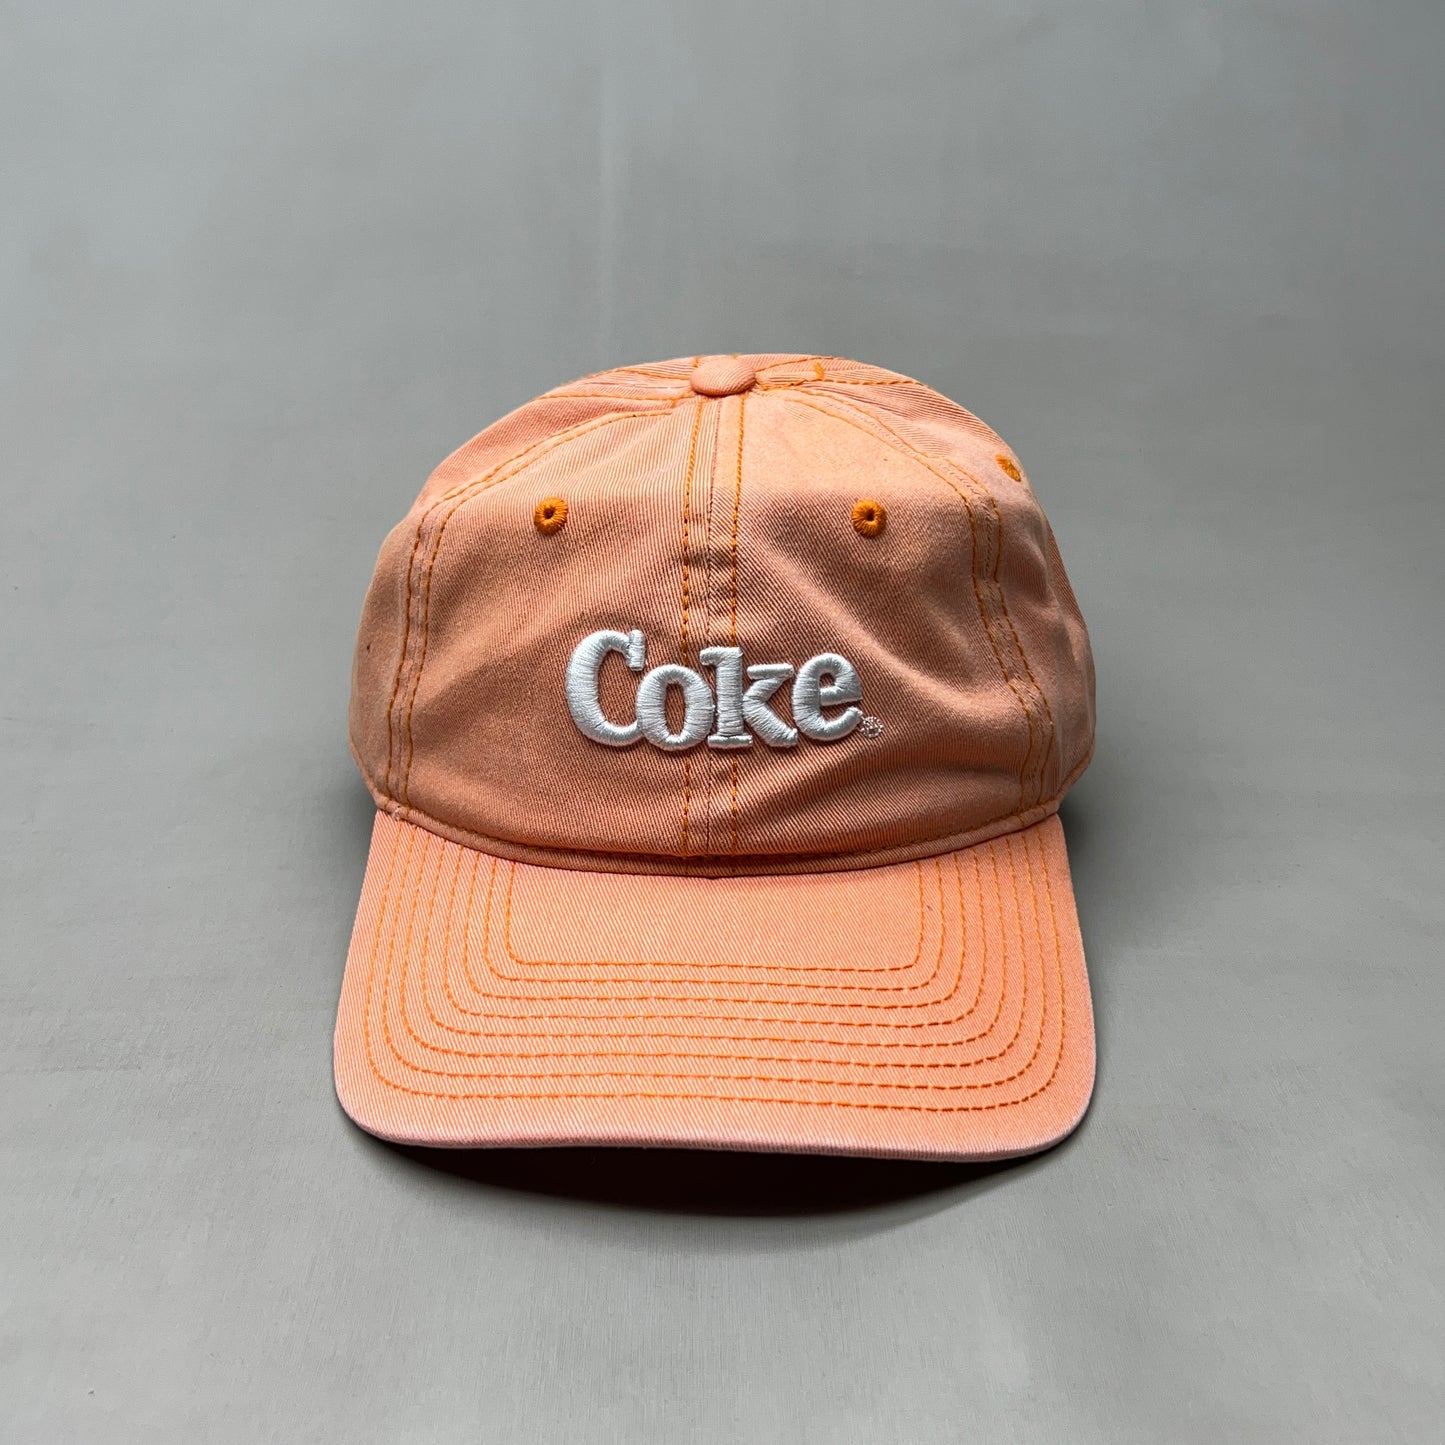 COCA-COLA Baseball Cap Strap Back Sz One Size Orange 23635 (New)